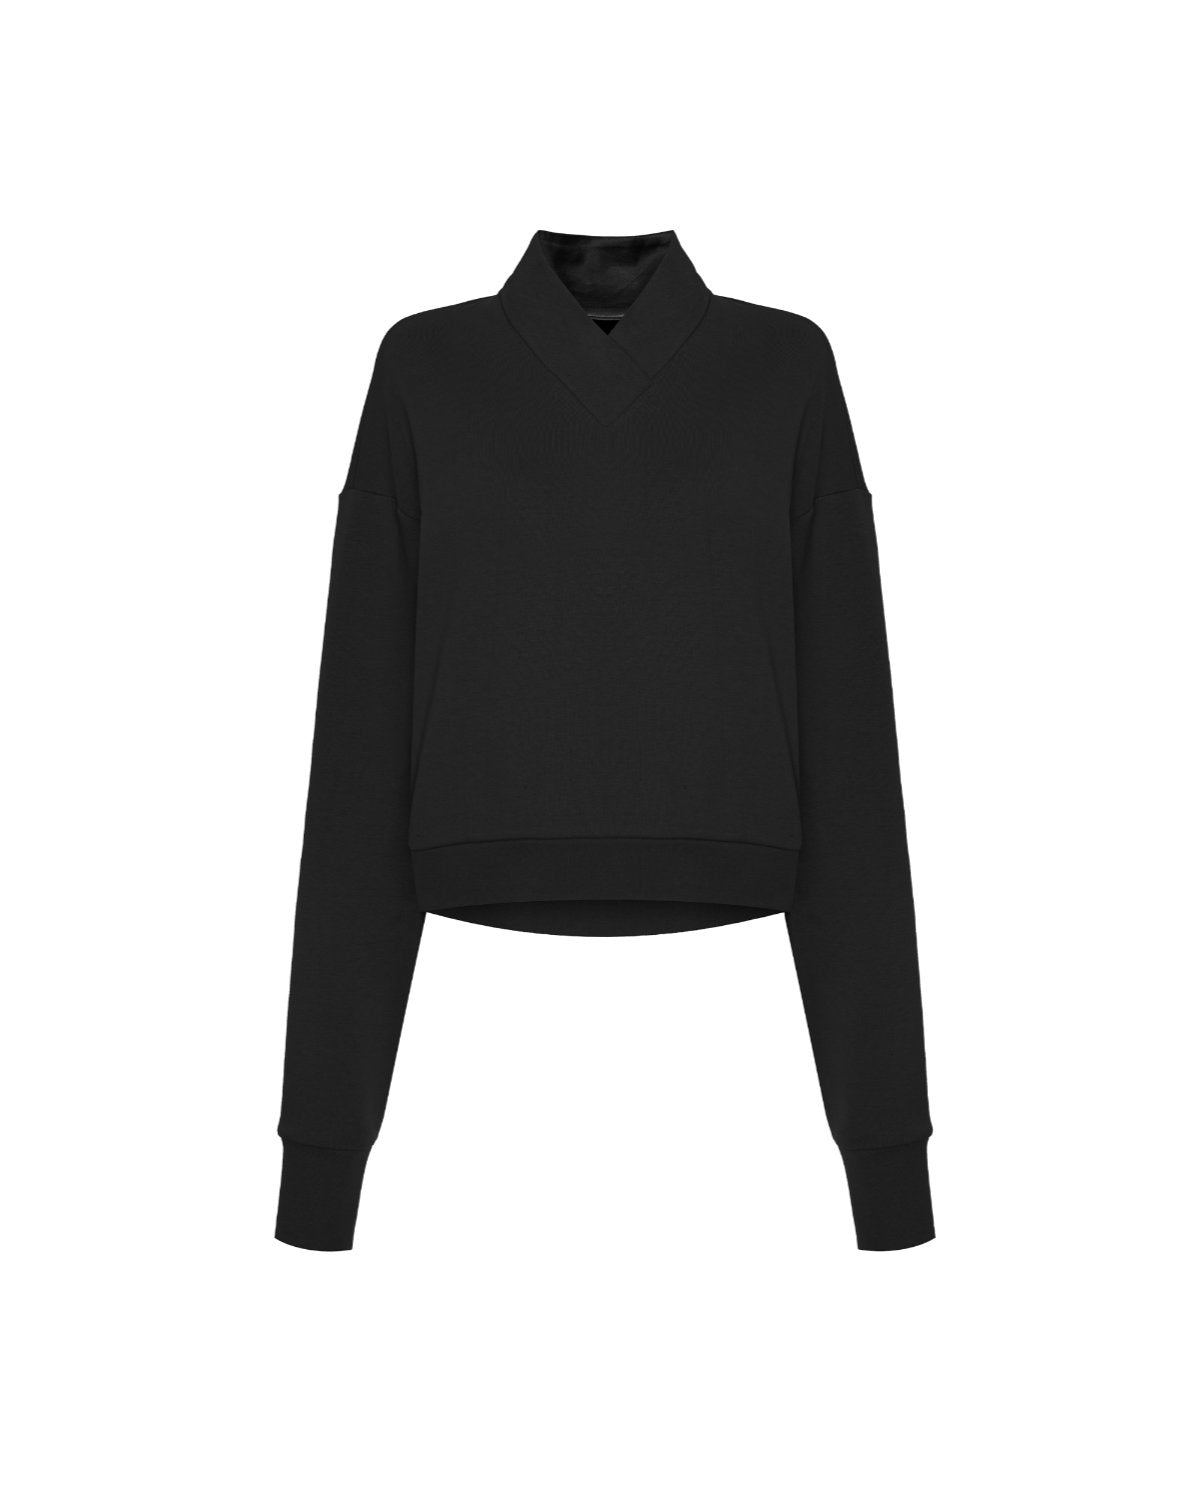 03 Sweatshirt black